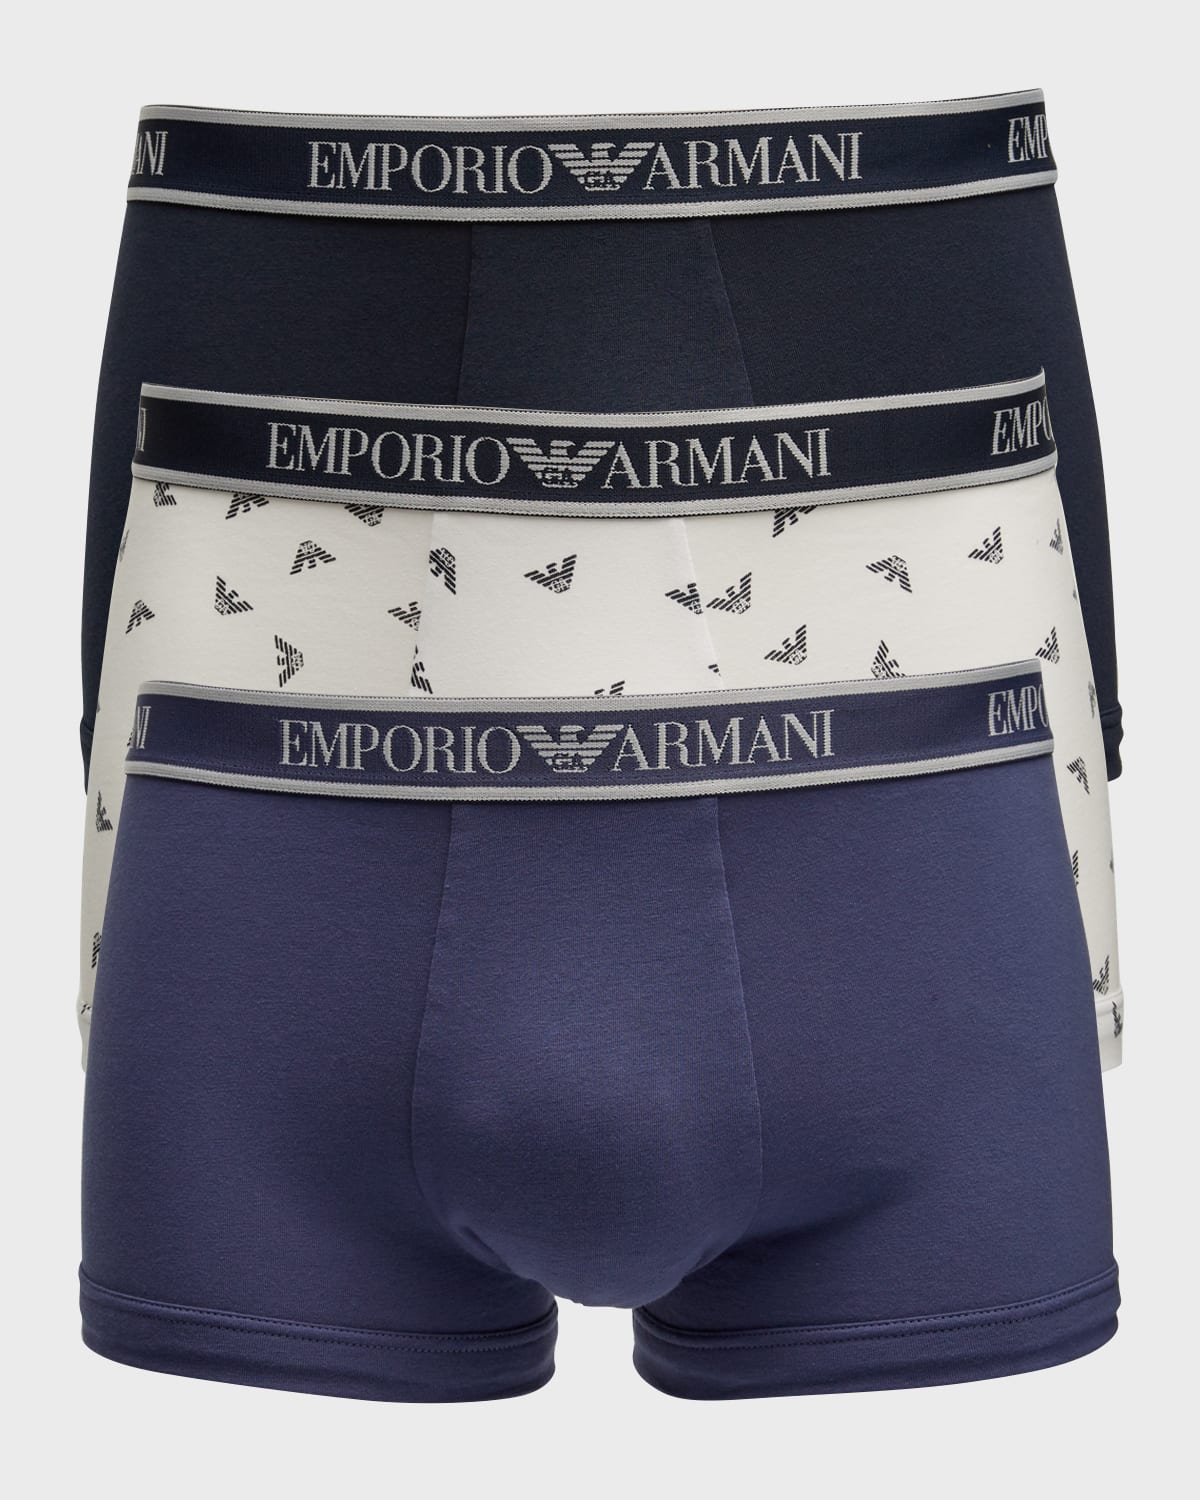 Emporio Armani Men's Modal Boxer Trunks | Neiman Marcus